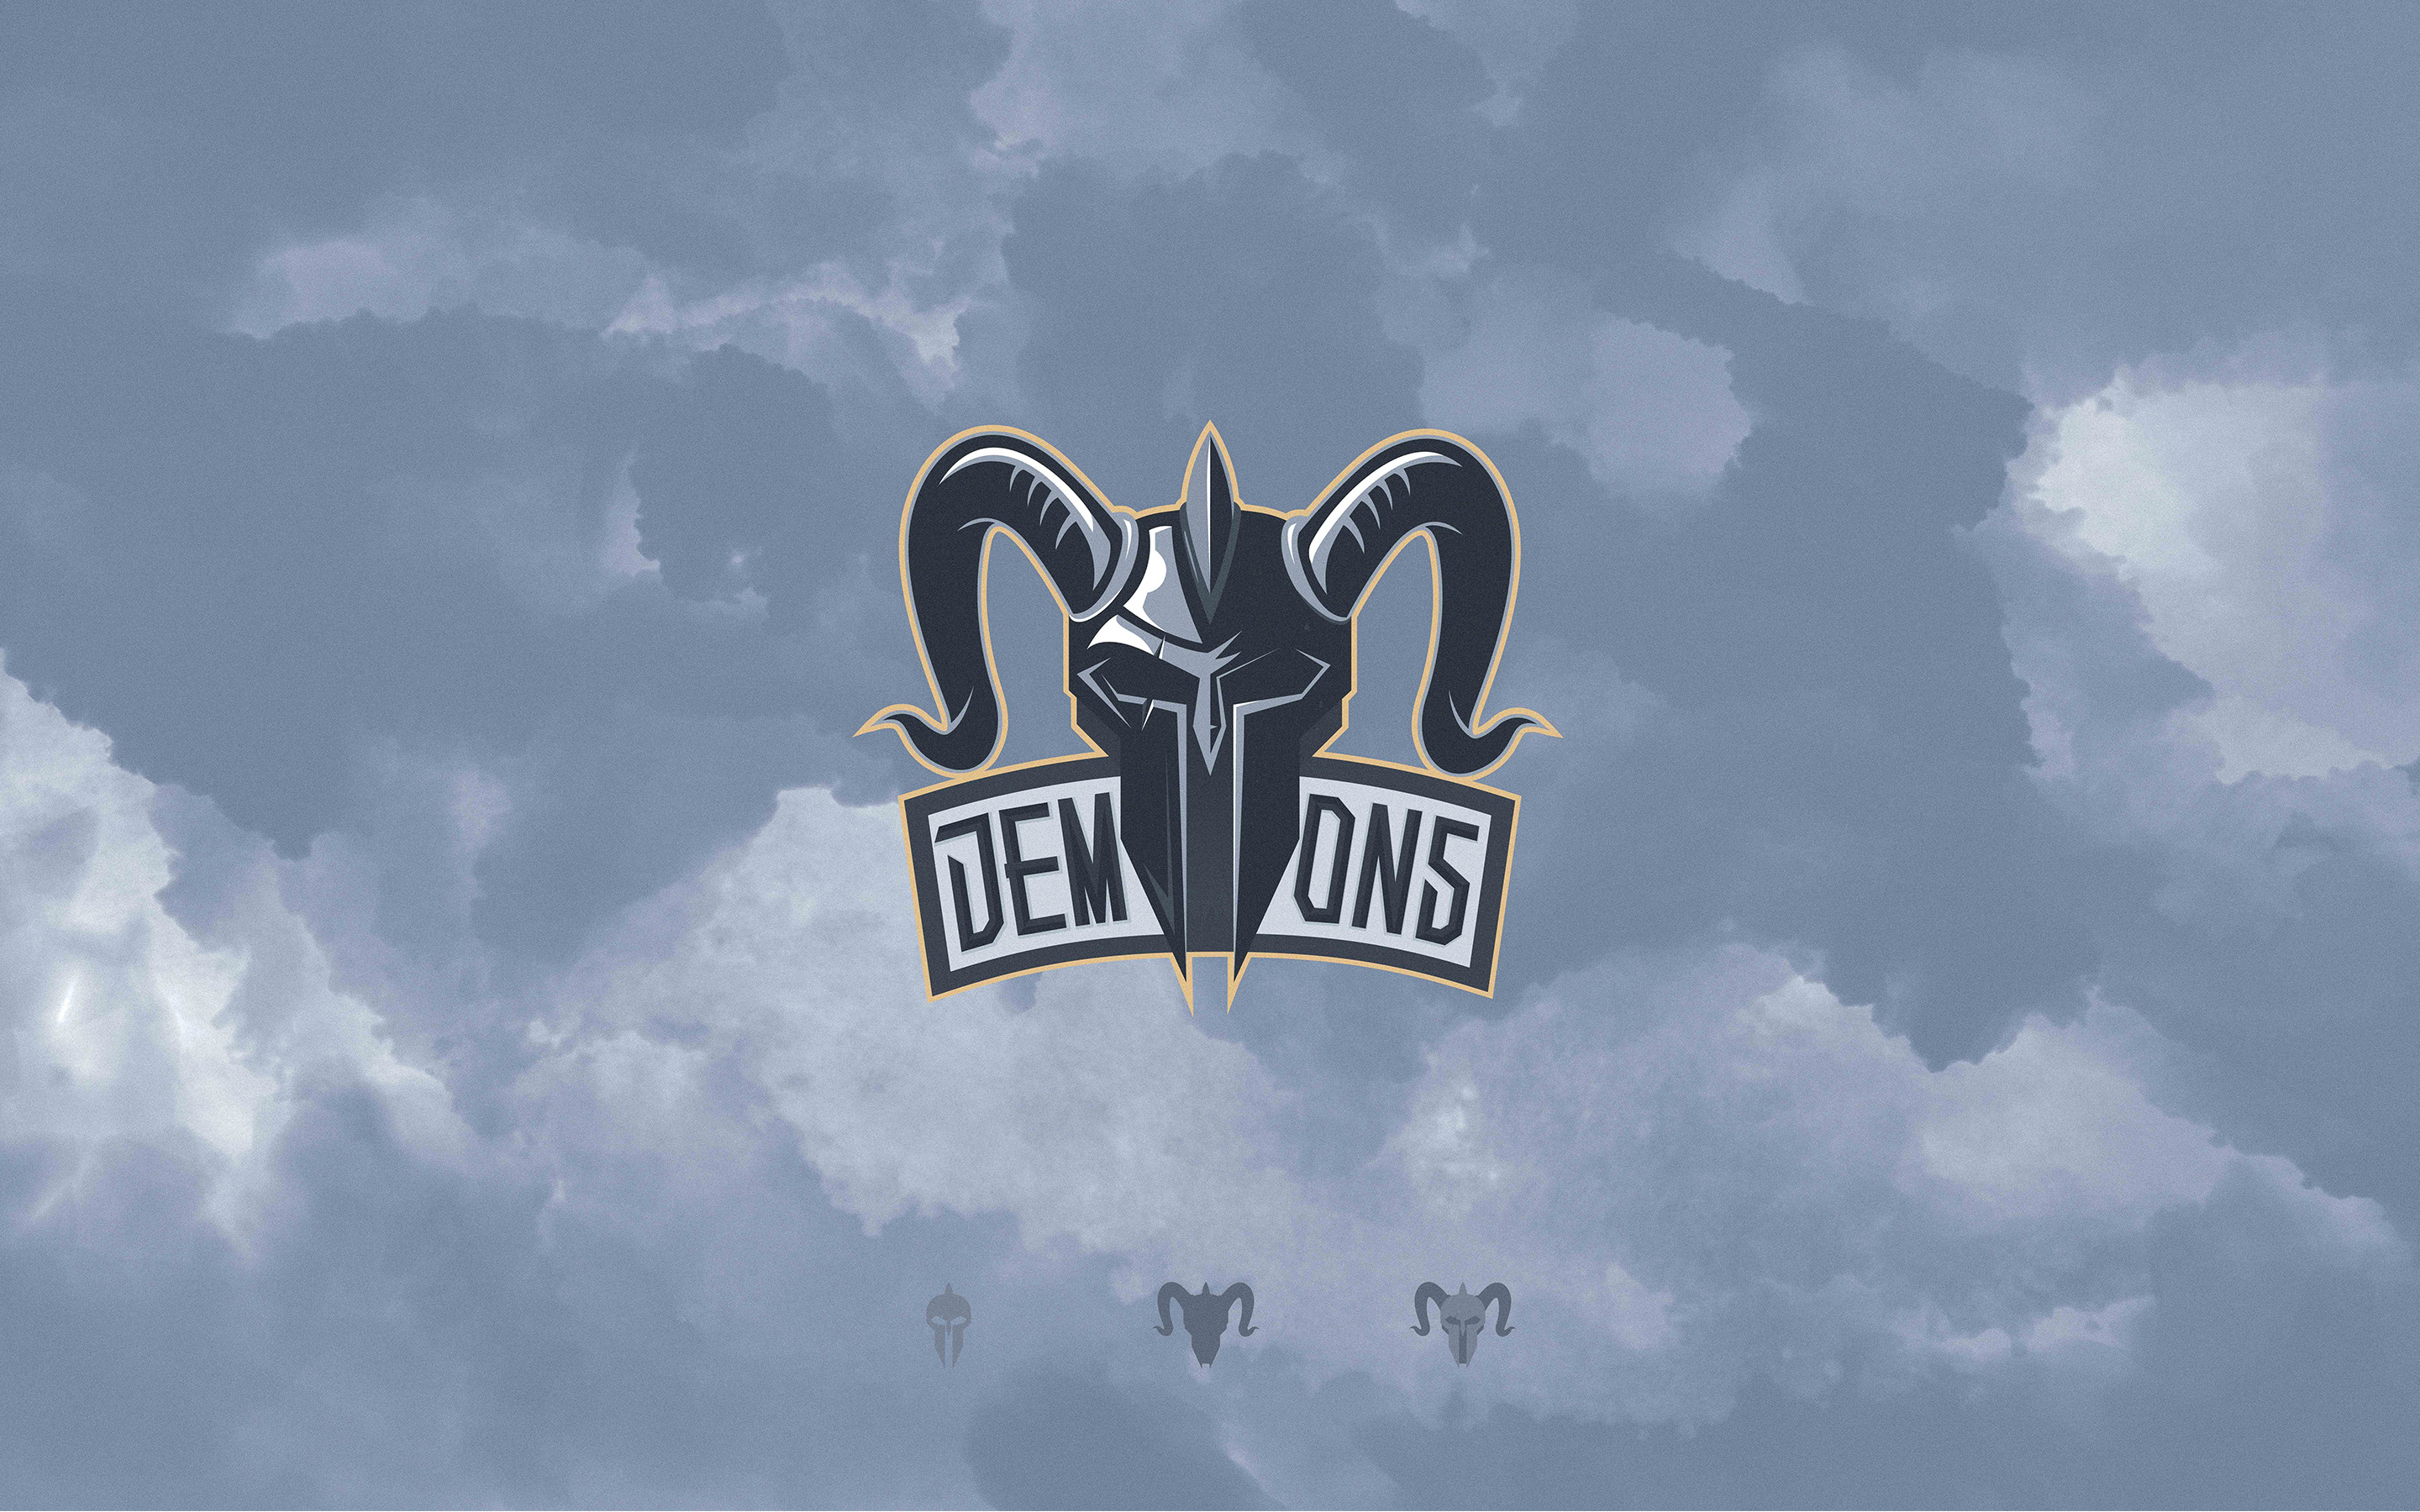 触手直播战队demons战队logo